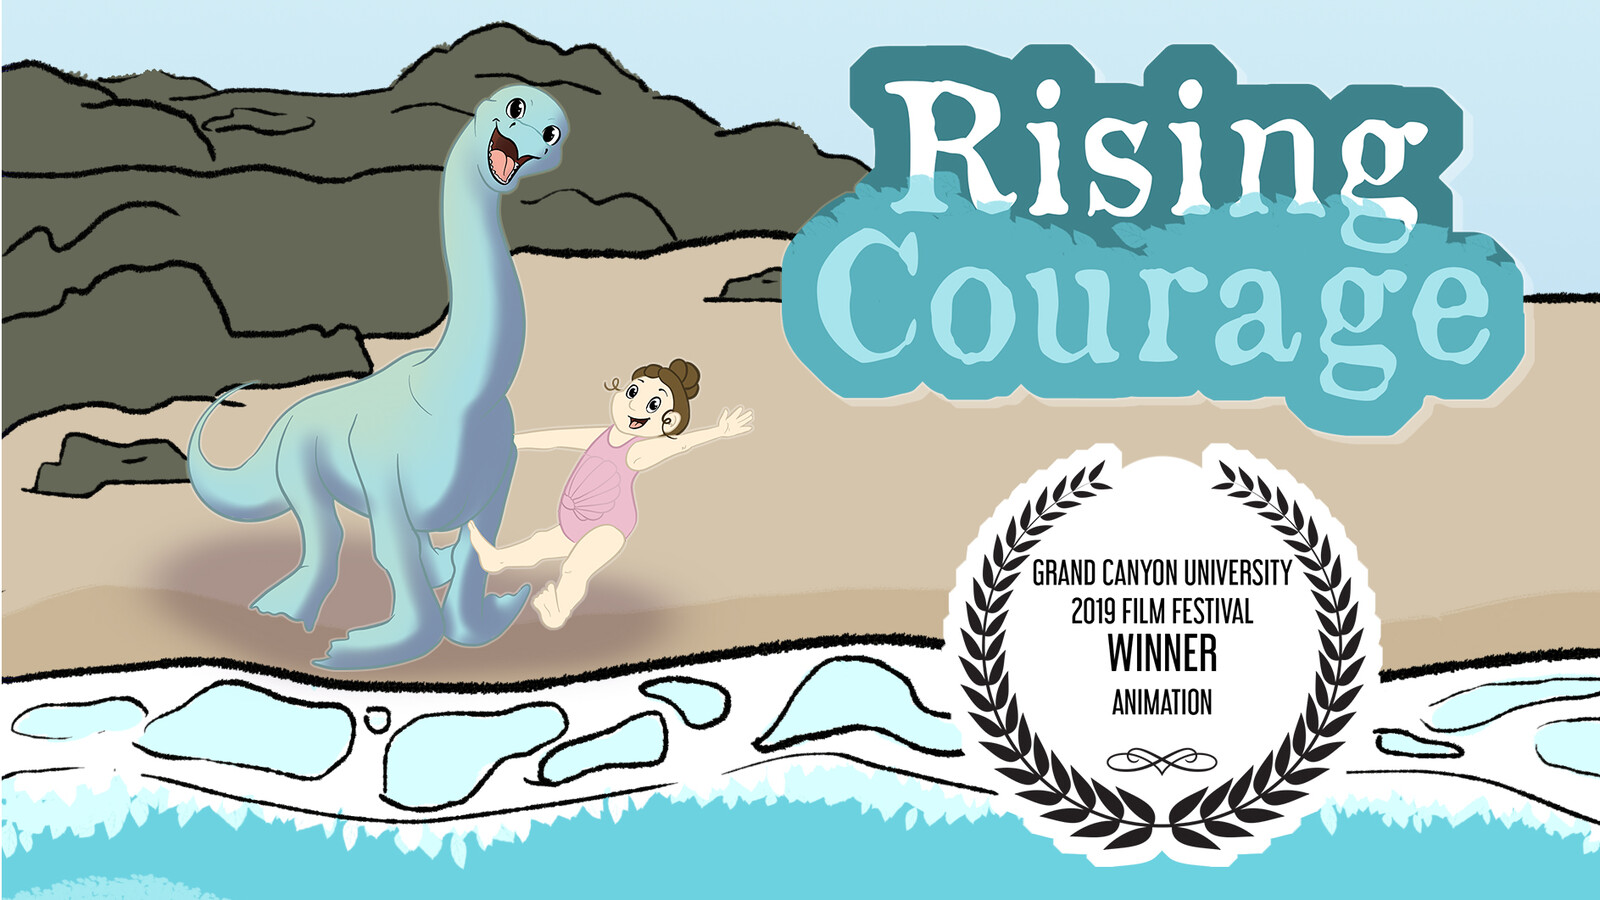 Award Winning Animatic
"GCU Film Festival 2019 - Best Animation"